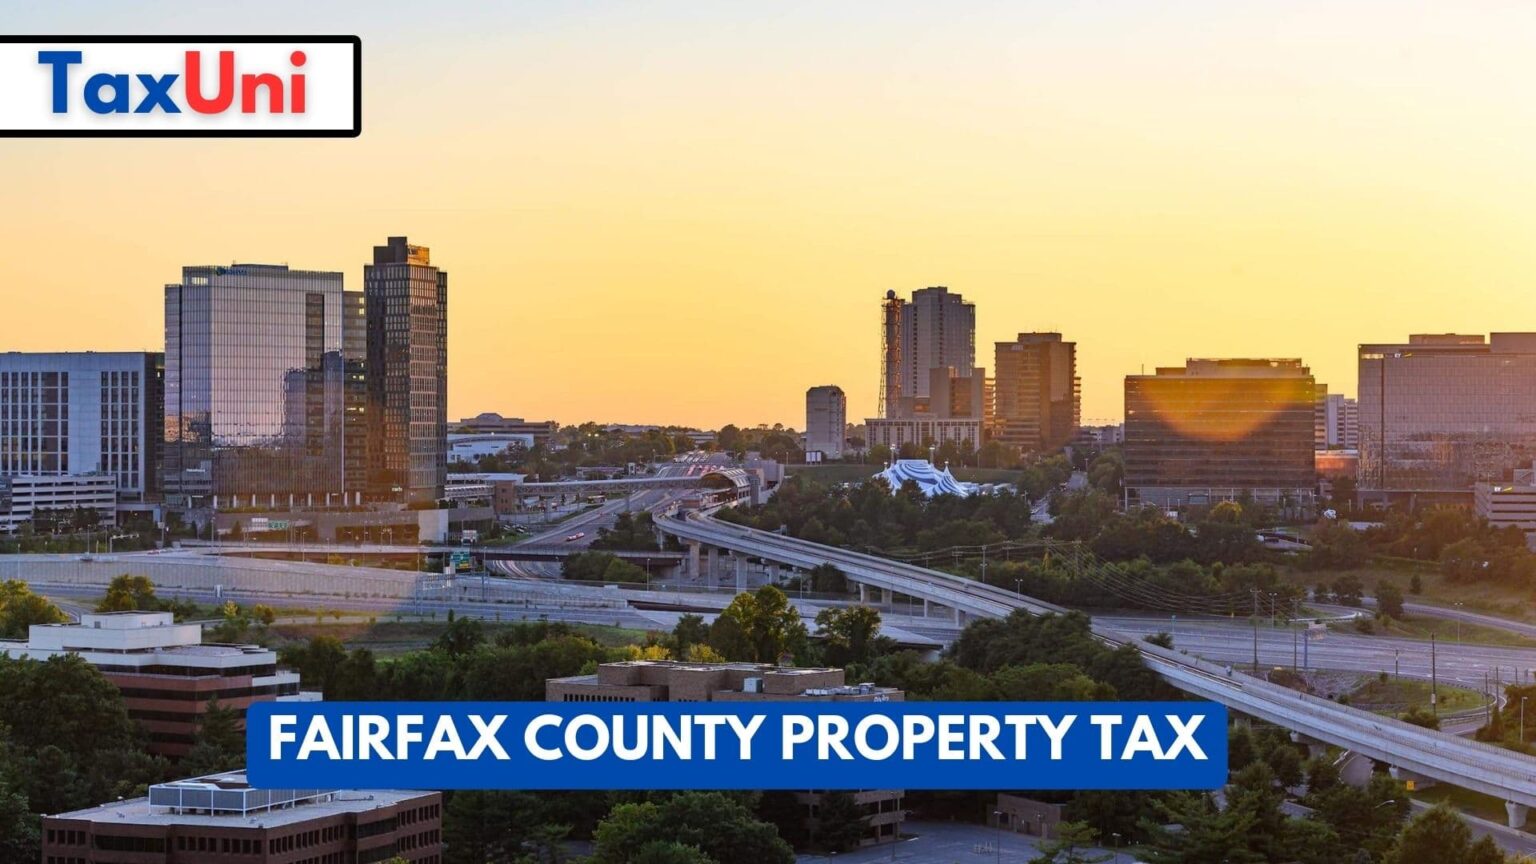 Fairfax County Property Tax 2 1536x864 